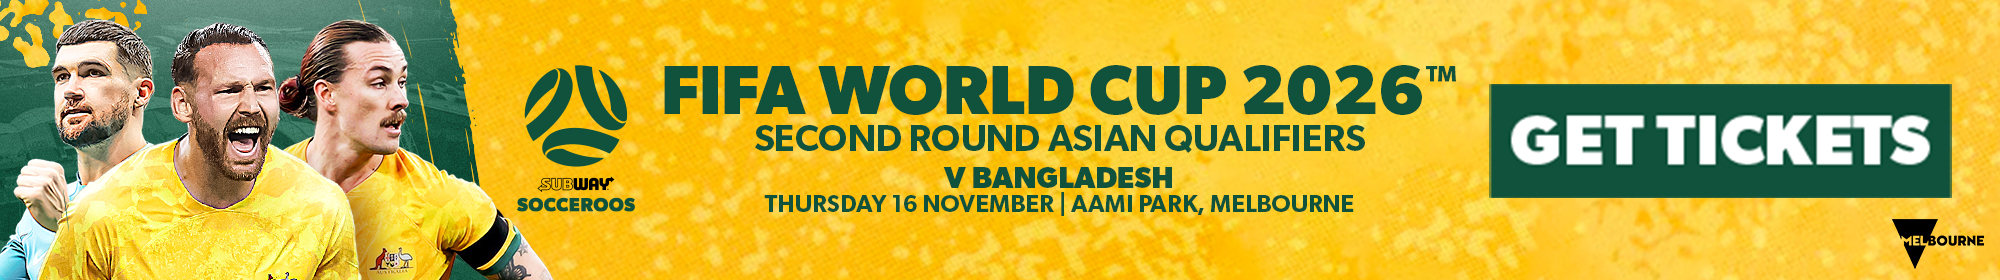 Socceroos v Bangladesh in AAMI Park - get tickets